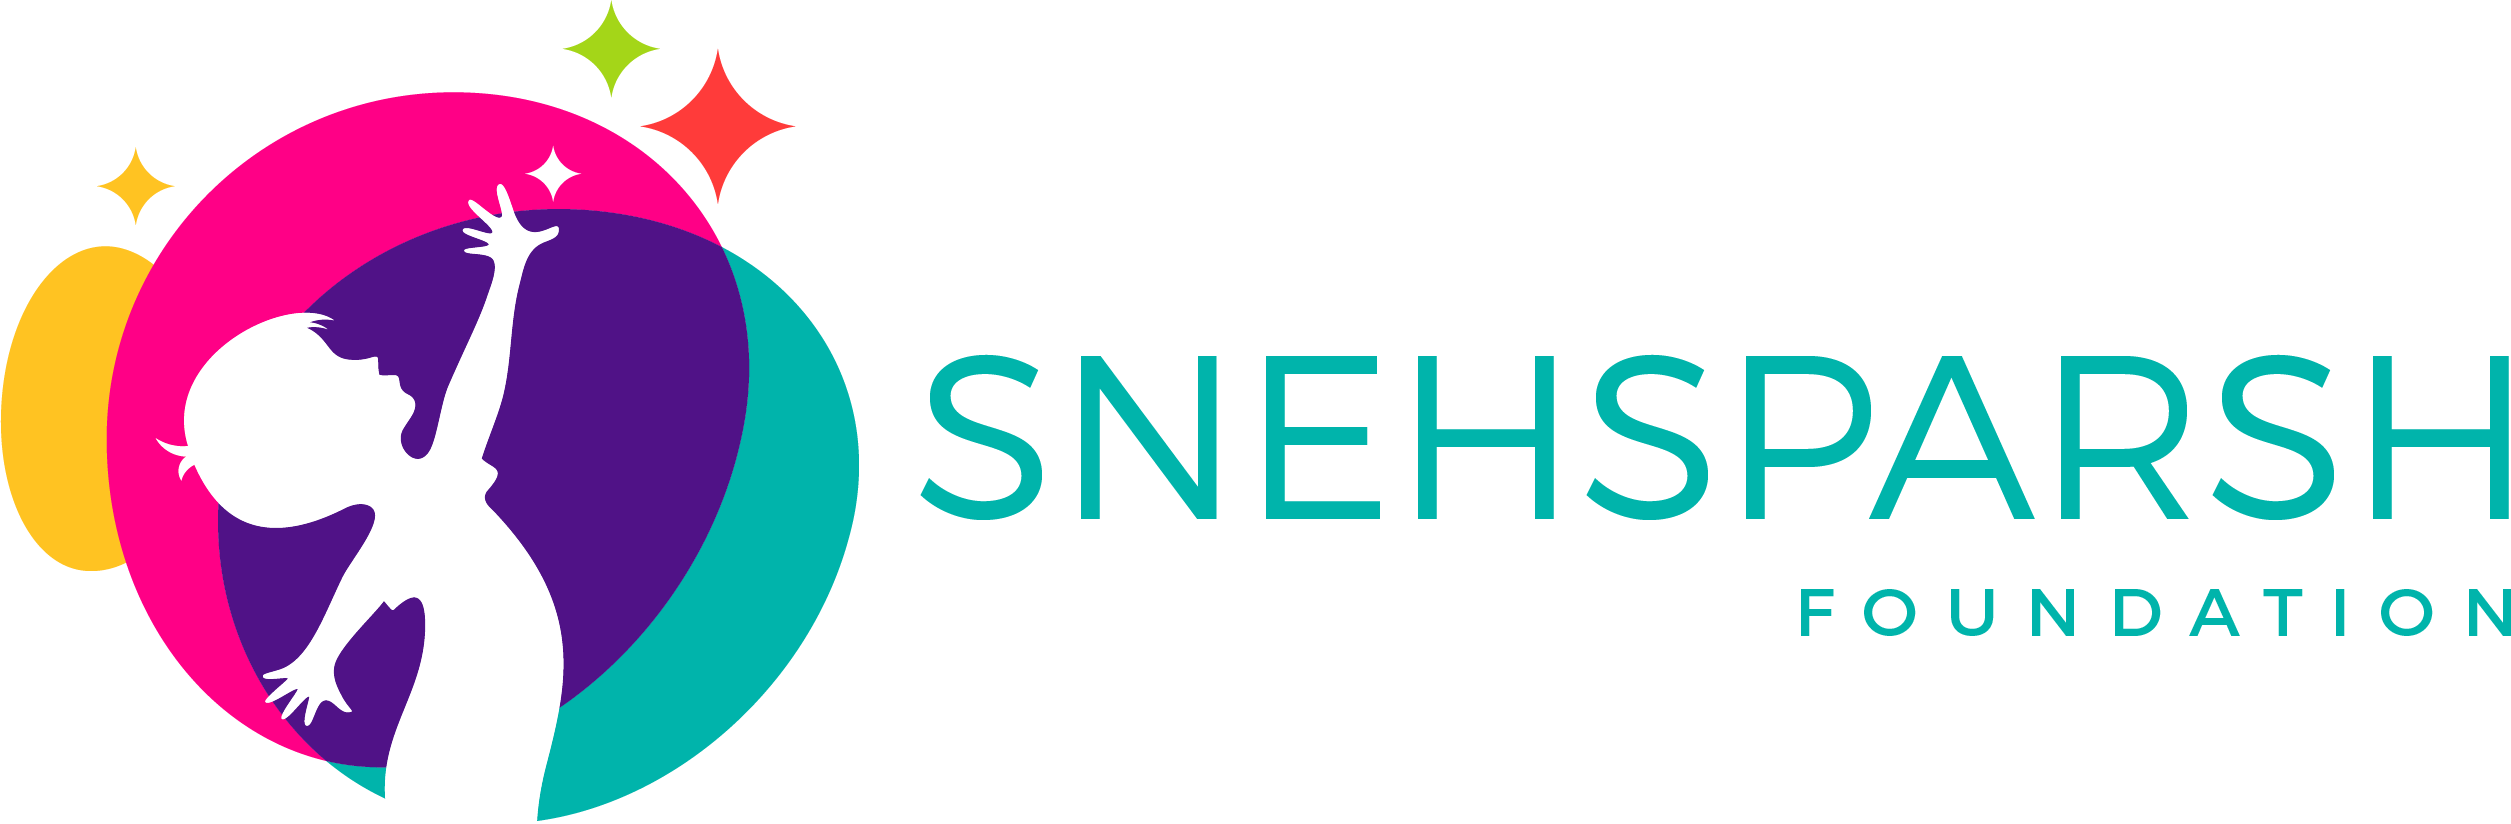 Snehsparsh Foundation